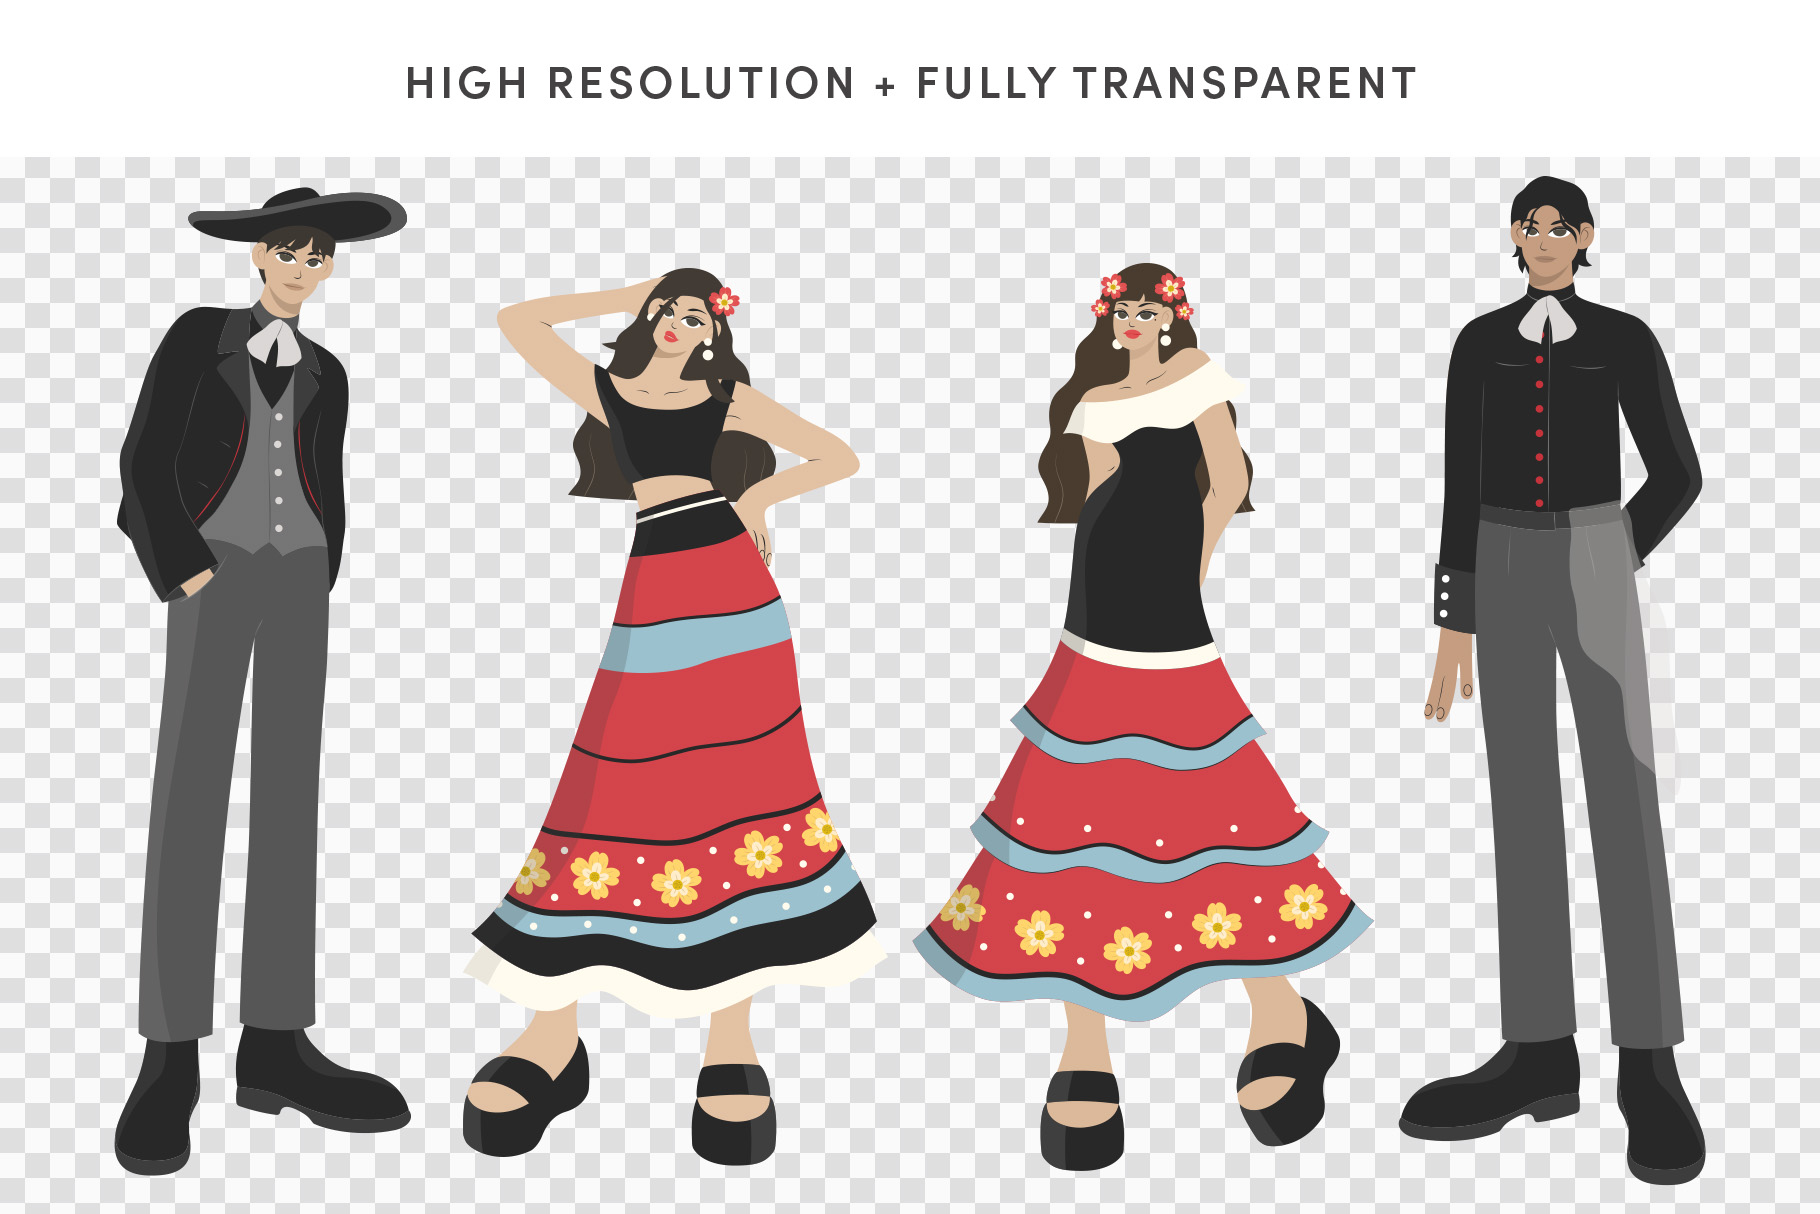 Latin People Illustrations Set(AI, EPS, PNG Format)